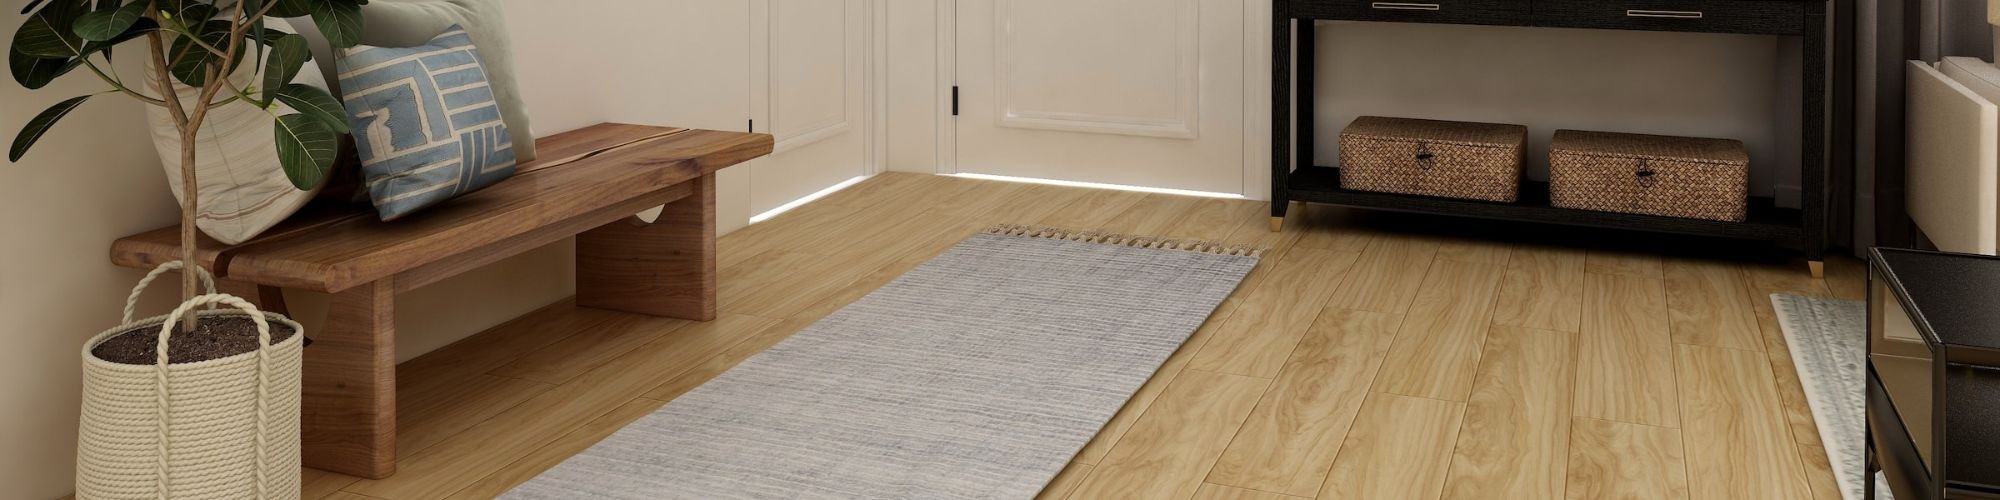 How to Remove Carpet and Carpet Padding in 7 Easy Steps - Bob Vila